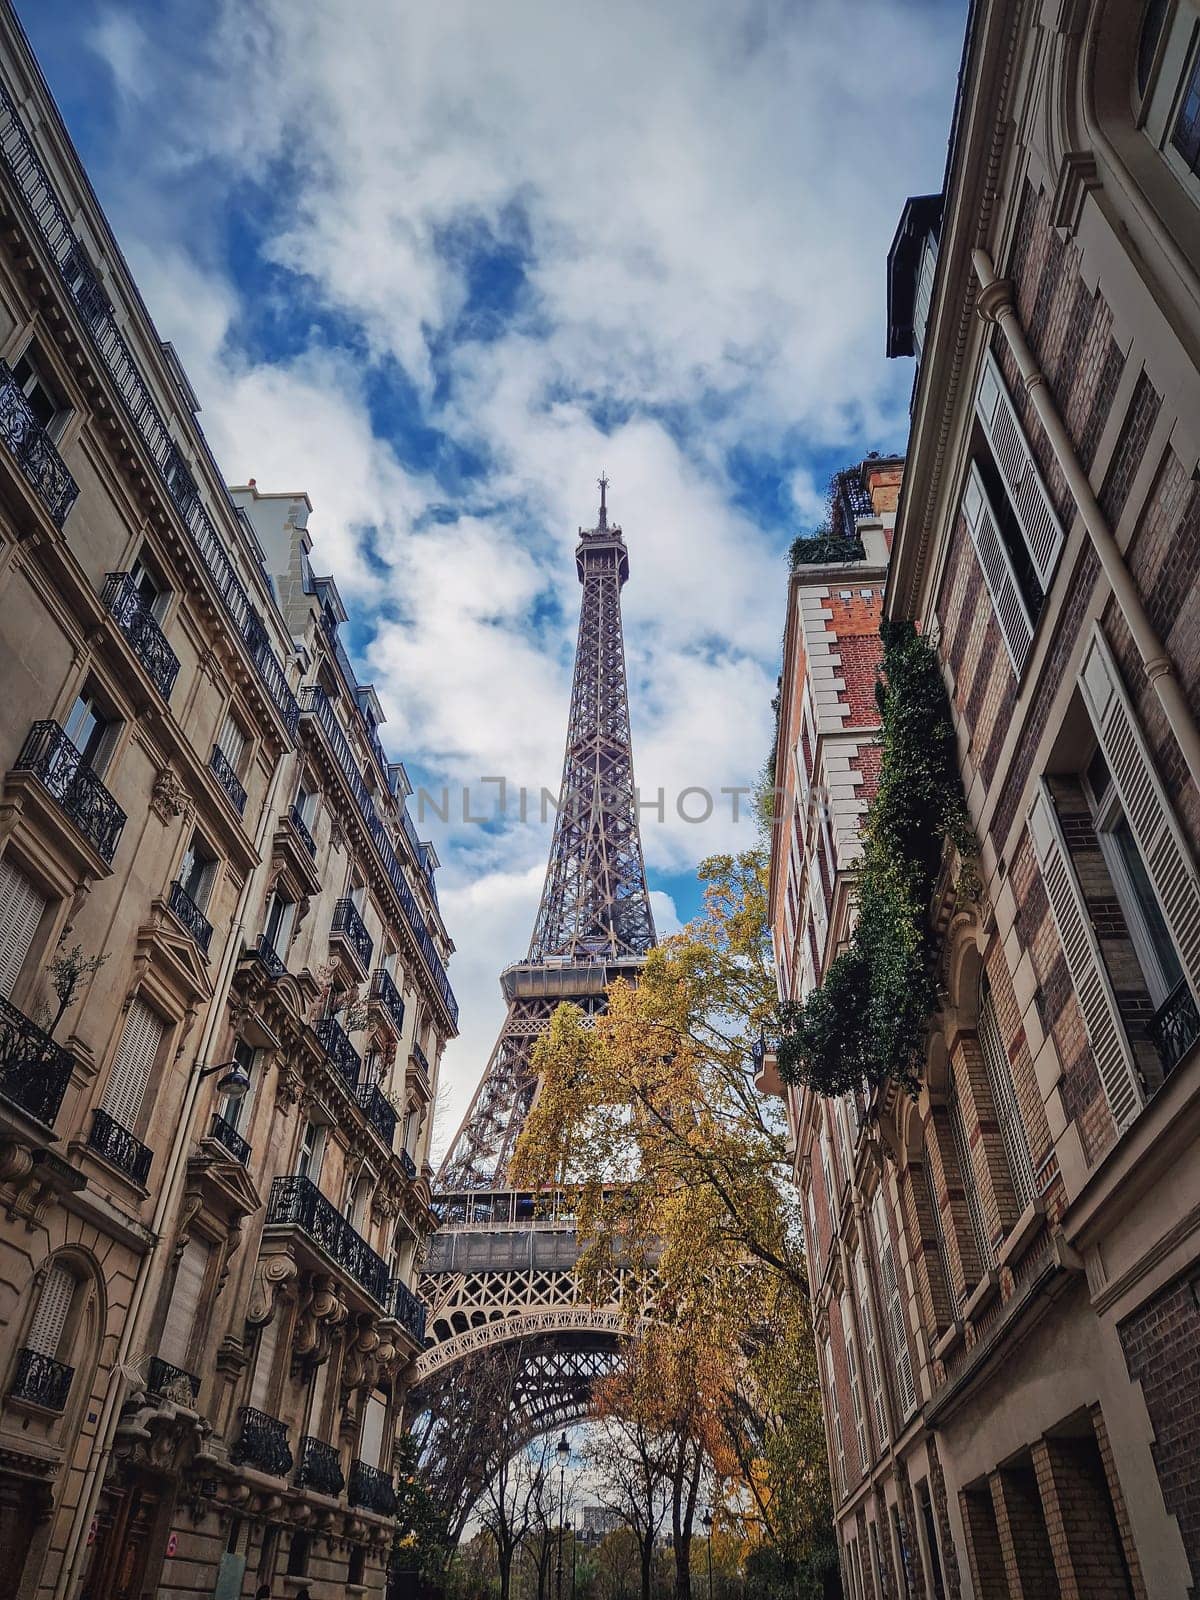 Eiffel tower as seen through the parisian buildings. Snenery autumn season in Paris, France.	 by psychoshadow